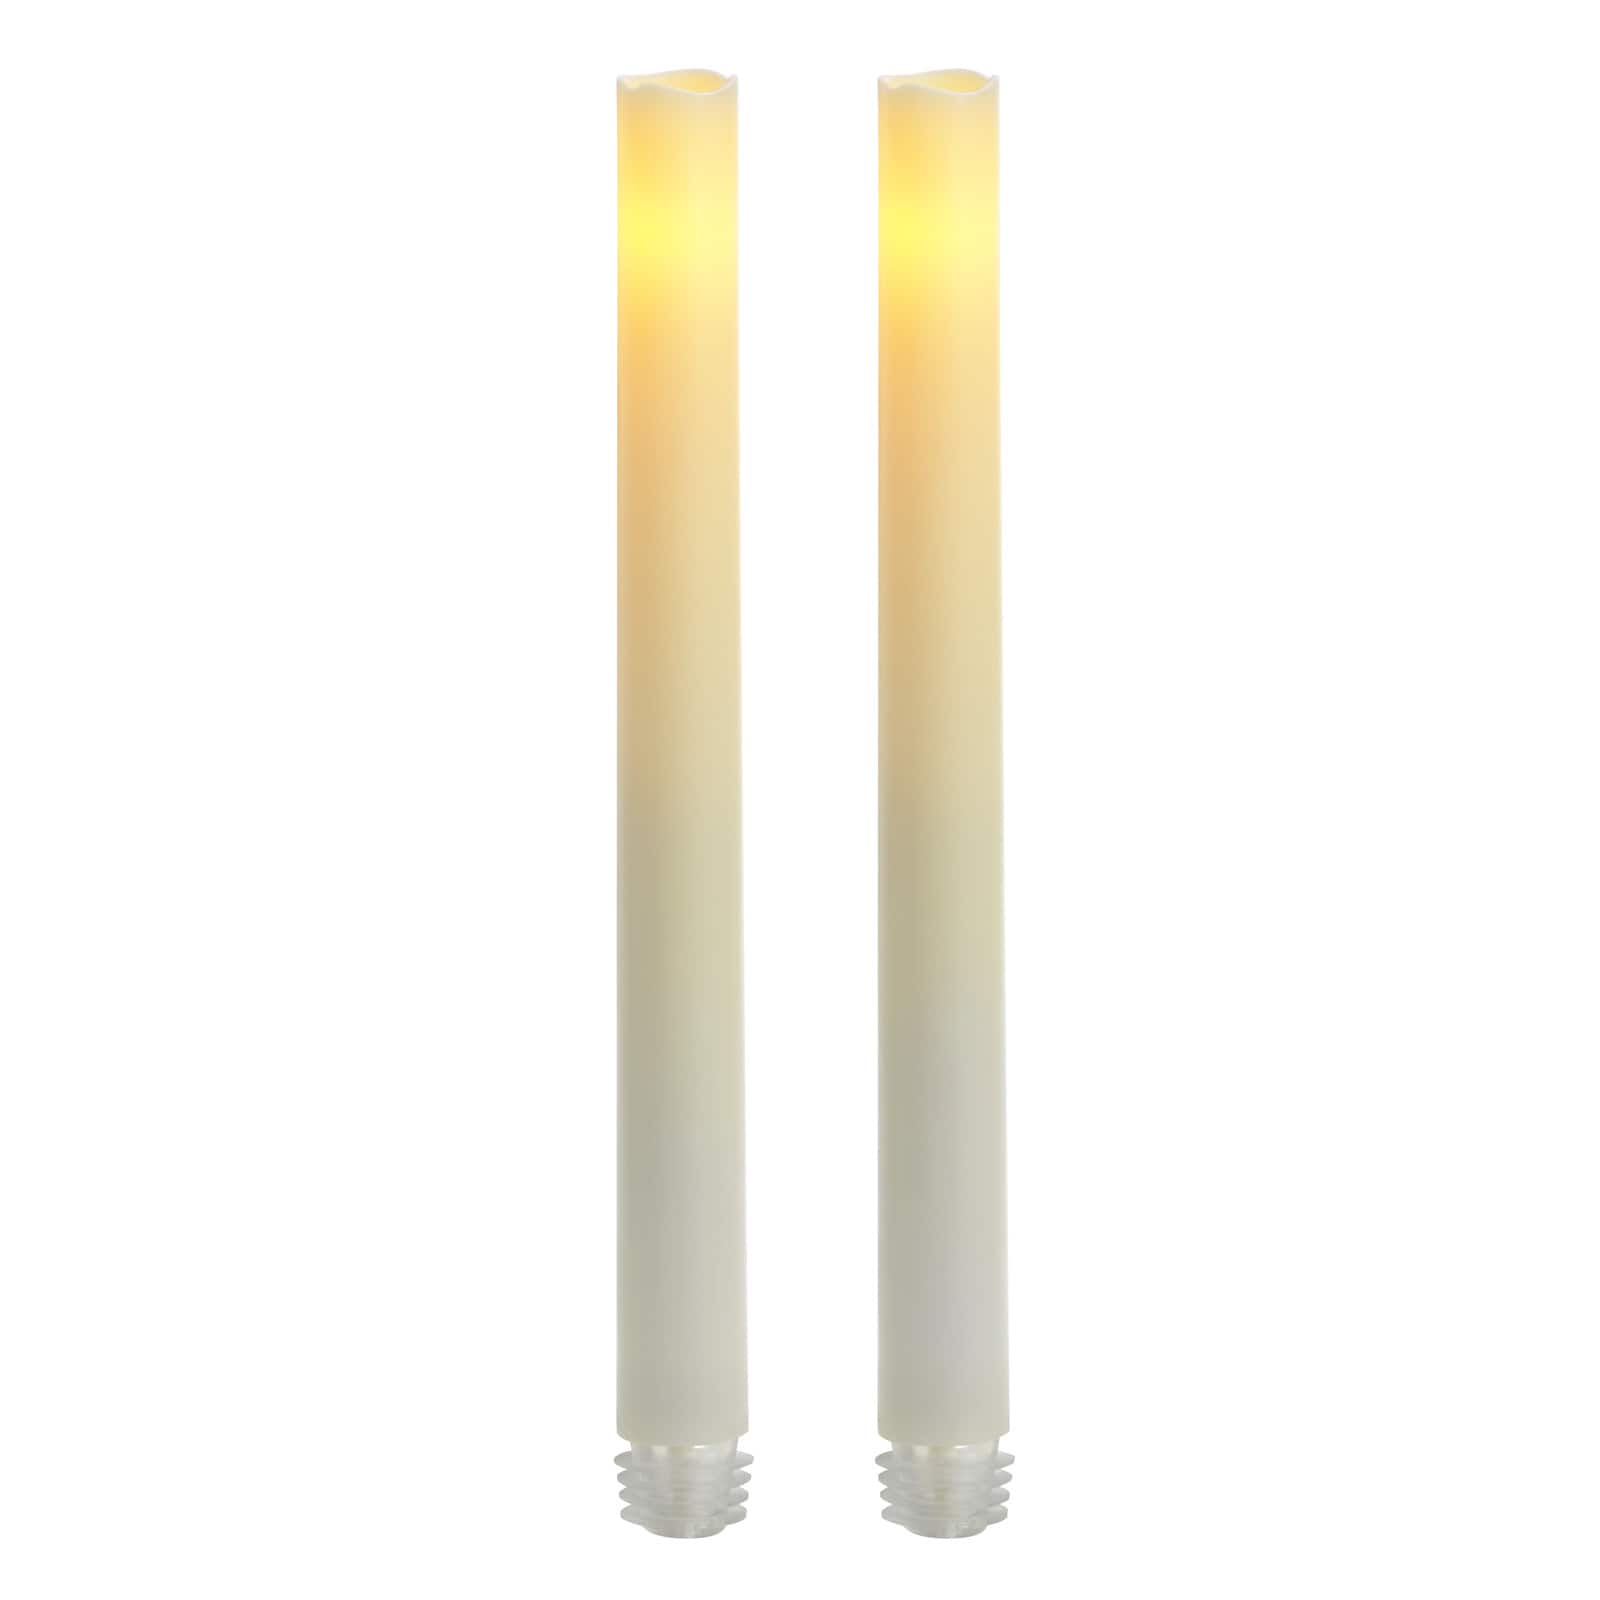 Michaels White Glitter LED Votive Candles by Ashland 12ct.